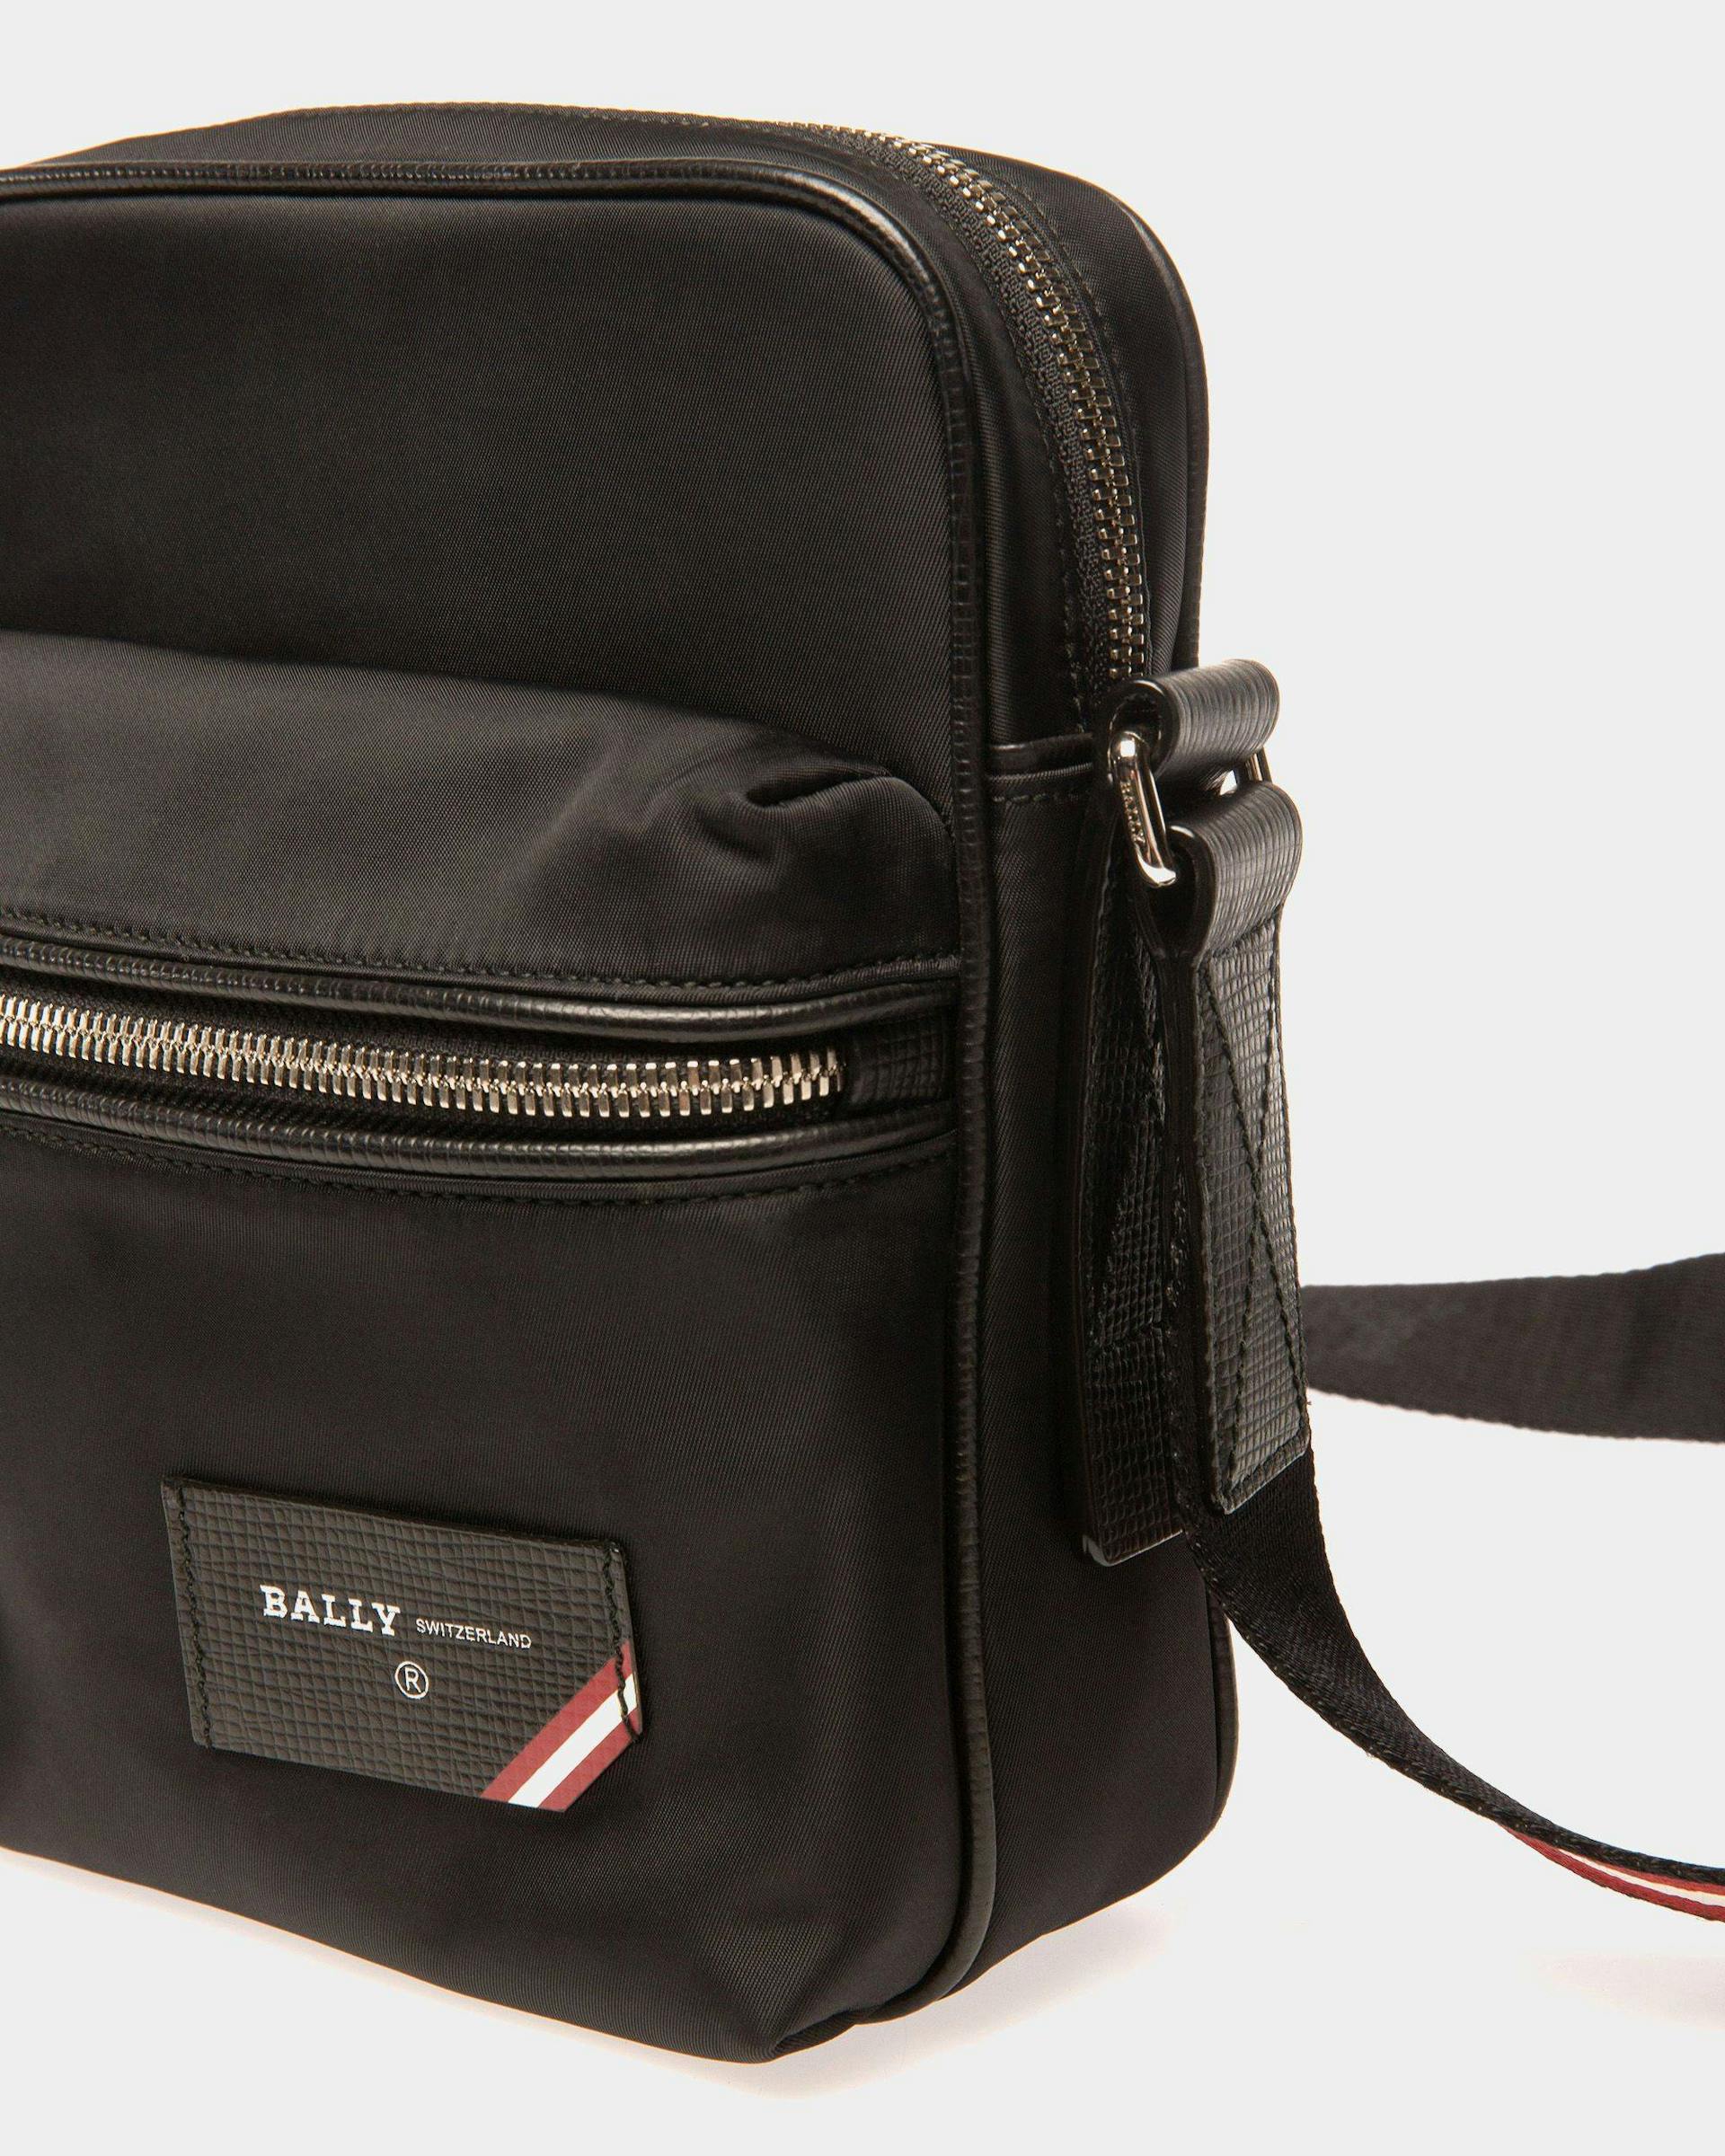 Men's Explore Crossbody Bag In Black Leather And Nylon | Bally | Still Life Detail